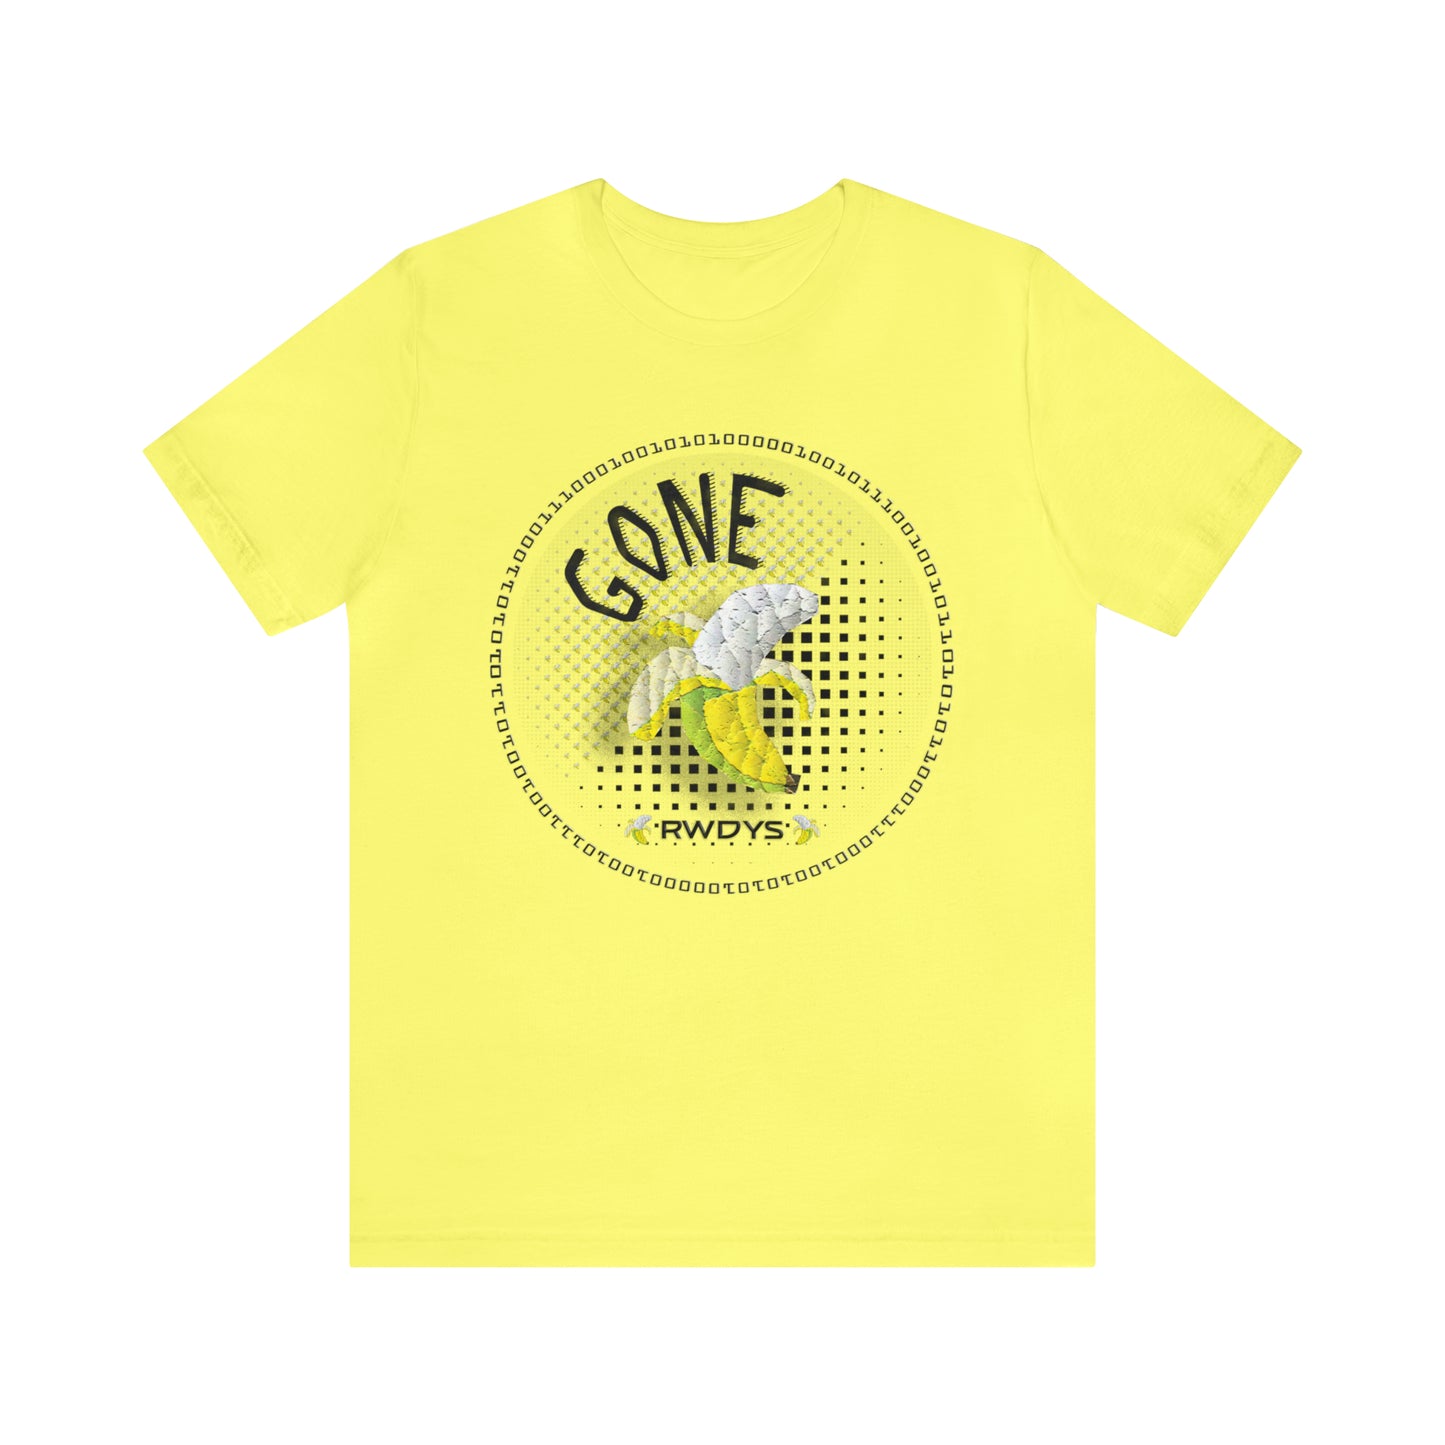 Gone Banana's - Rowdy's Clothing Co. T-Shirt